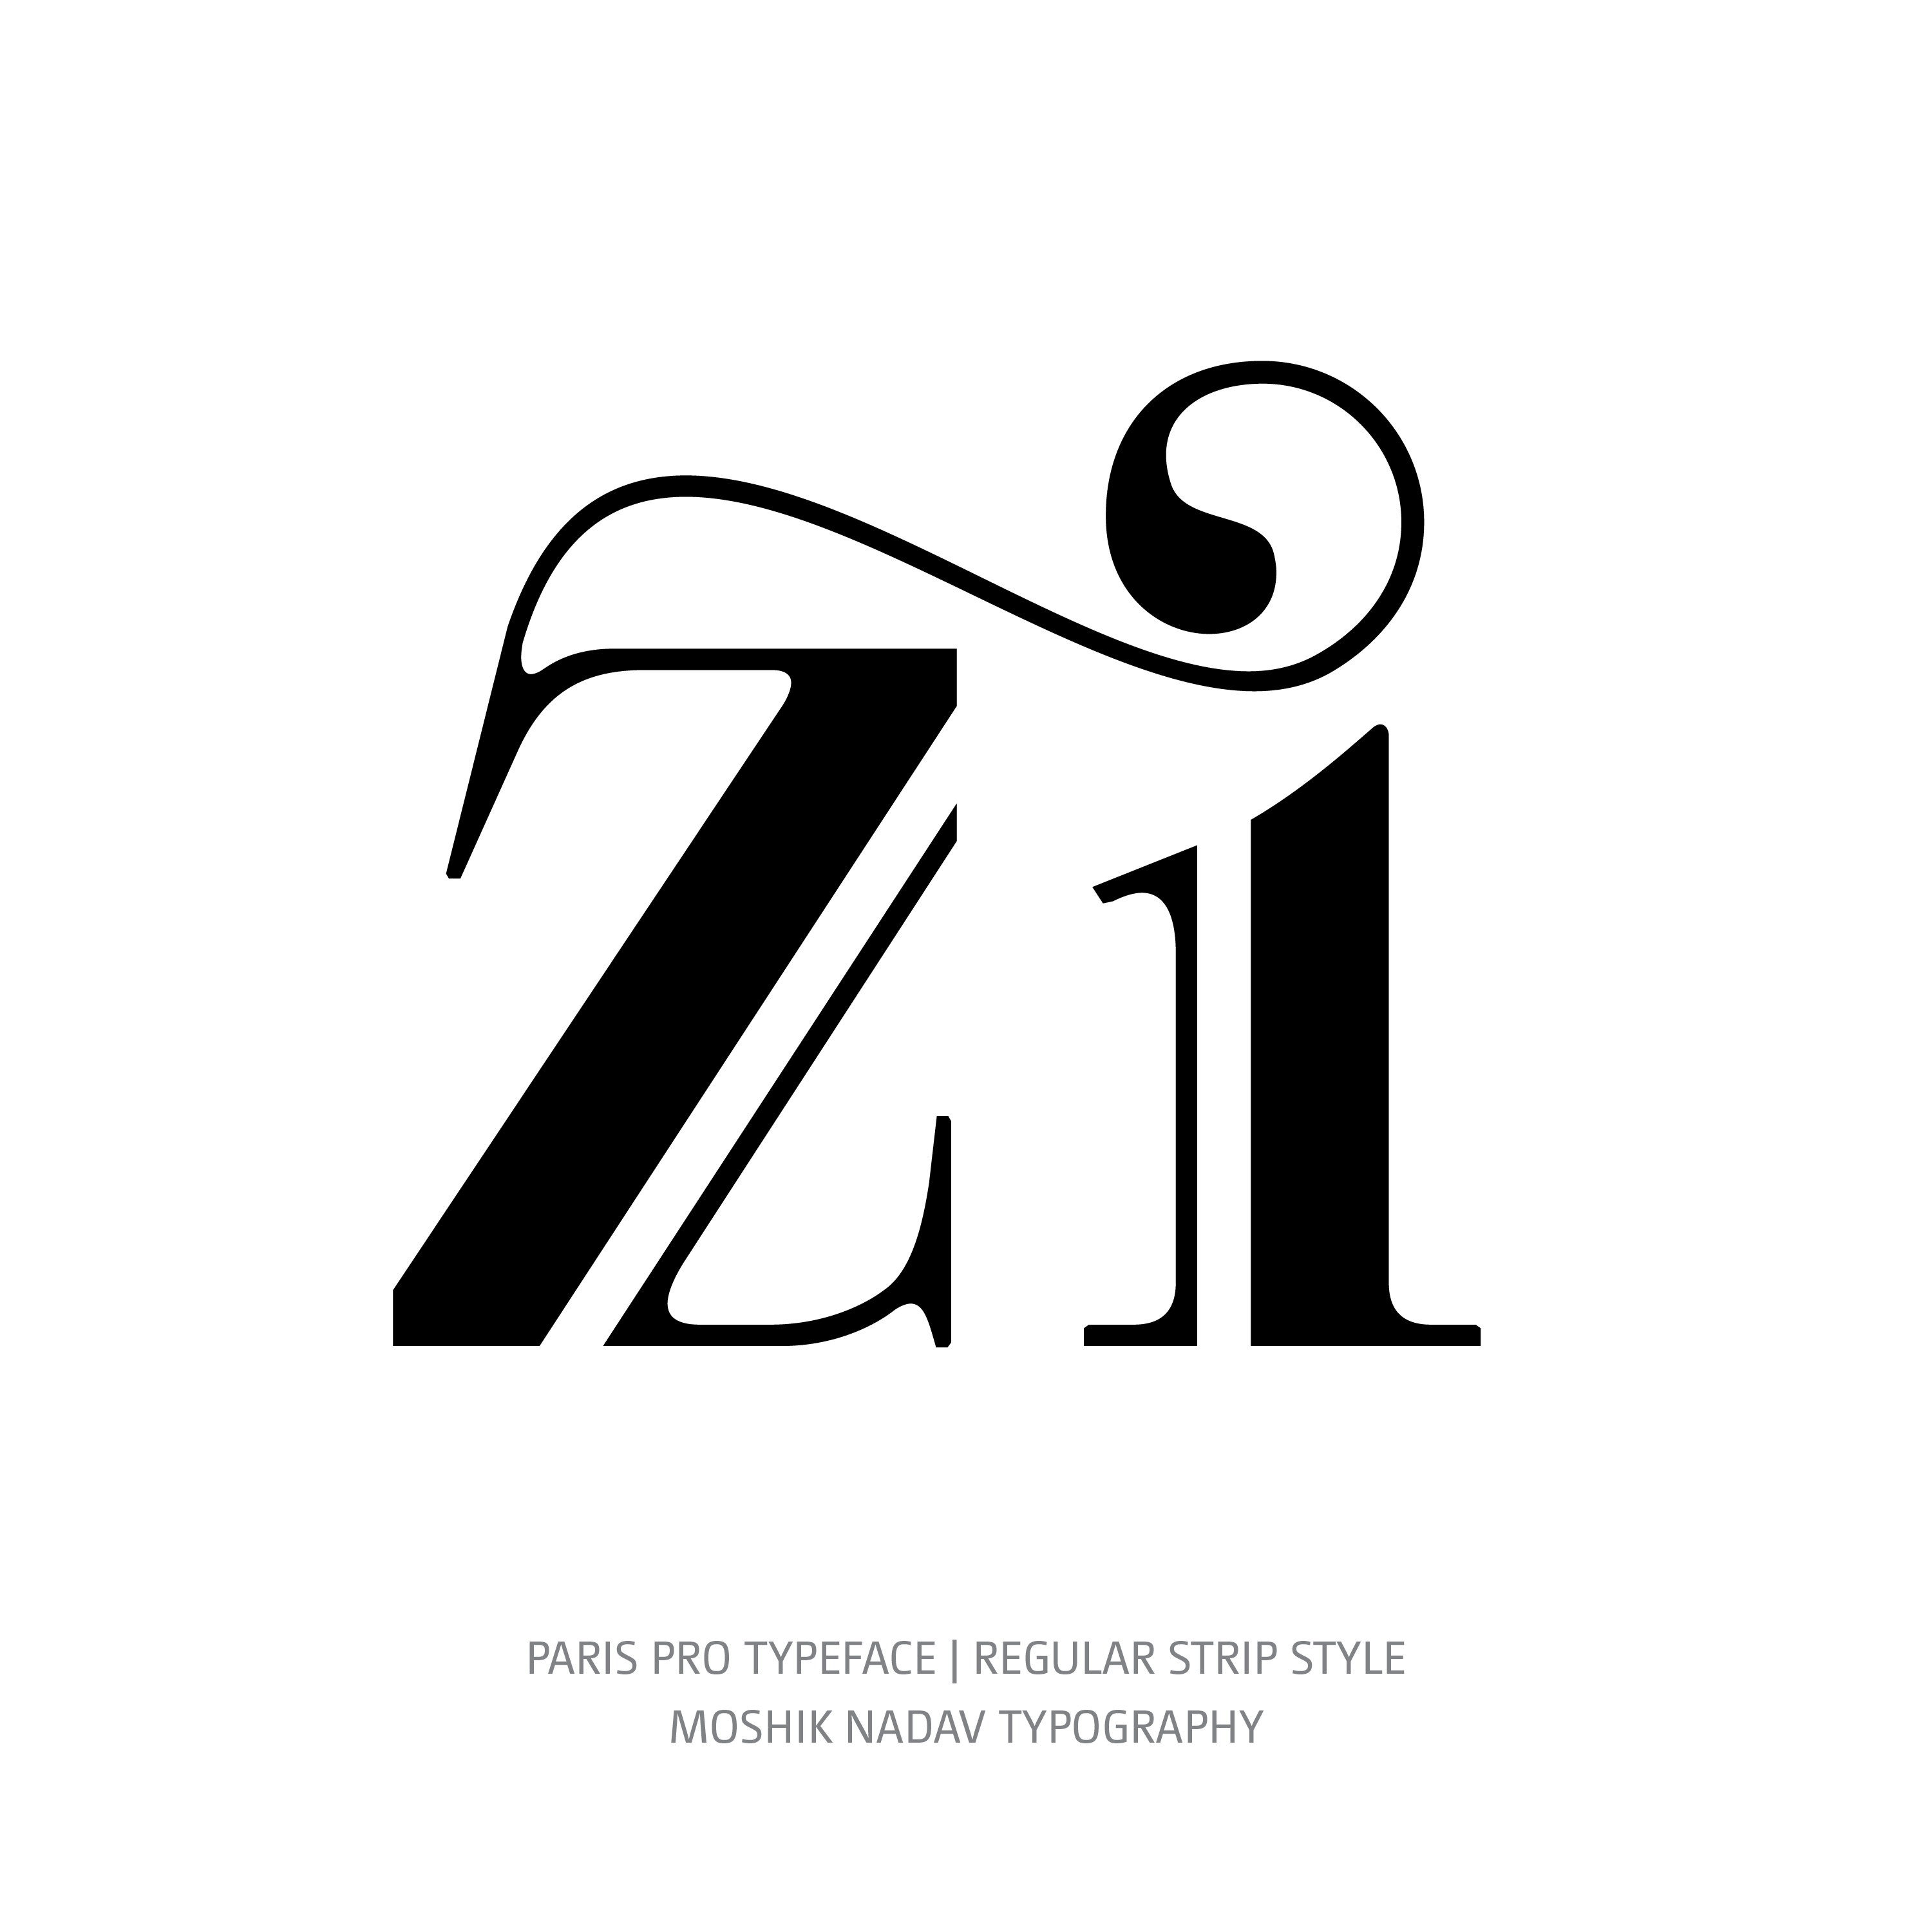 Paris Pro Typeface Regular Strip zi ligature